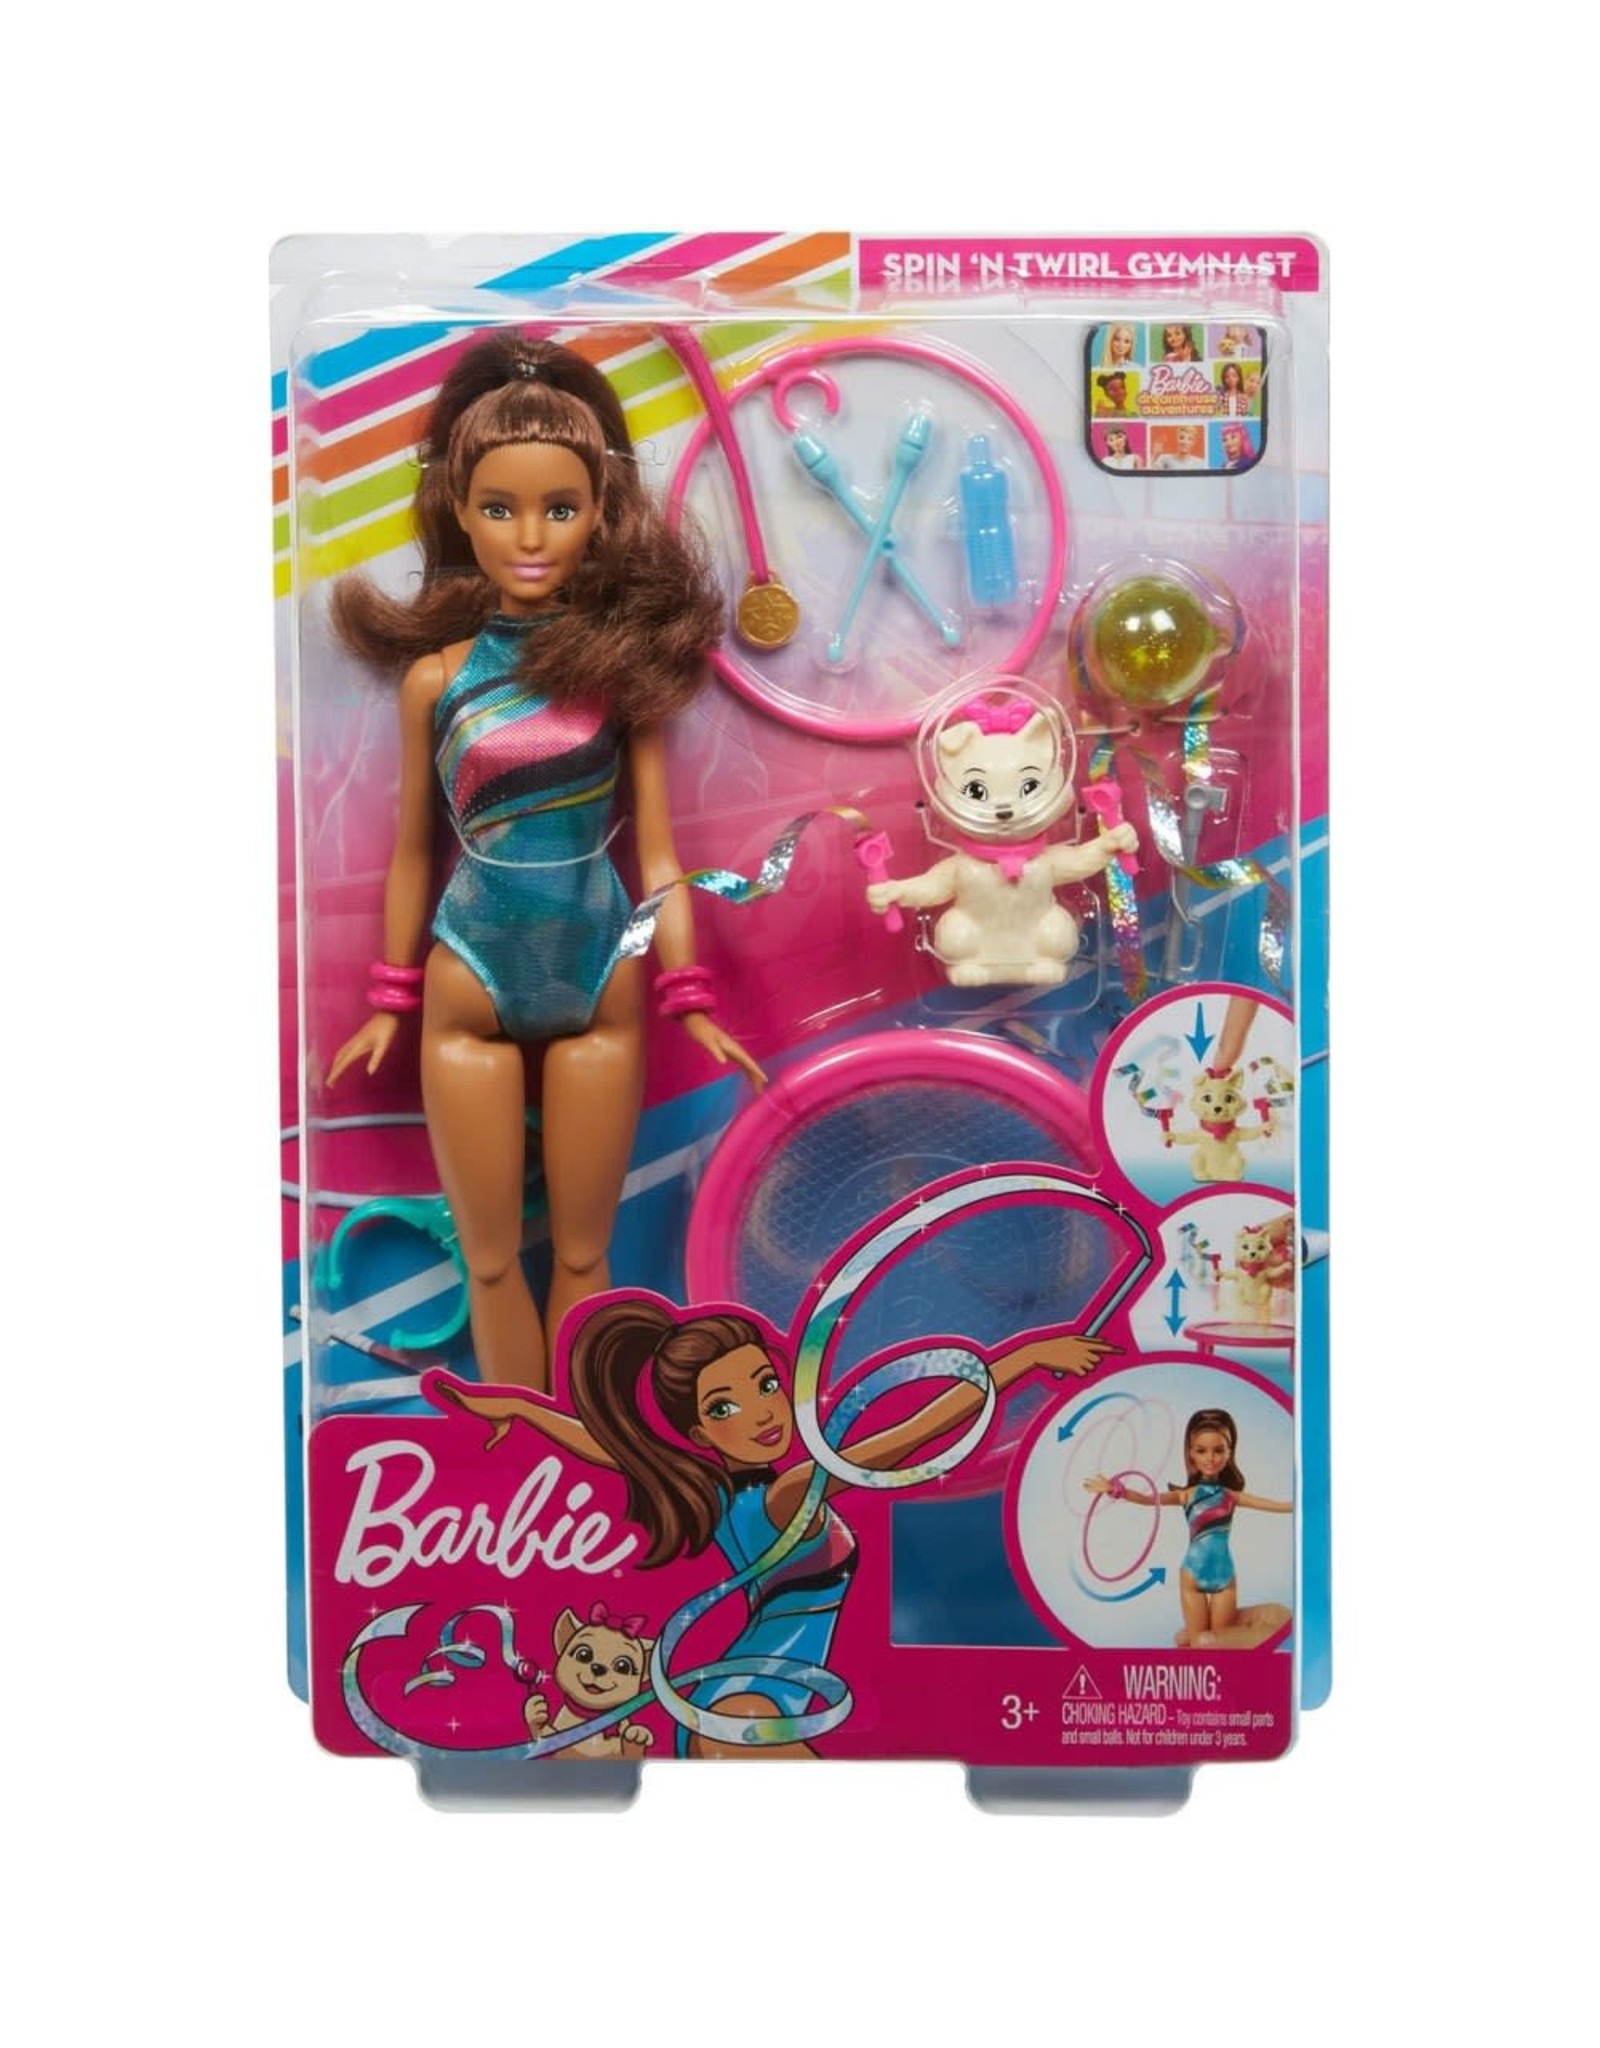 Barbie Barbie Dreamhouse Adventures Spin & Twirl Gymnast